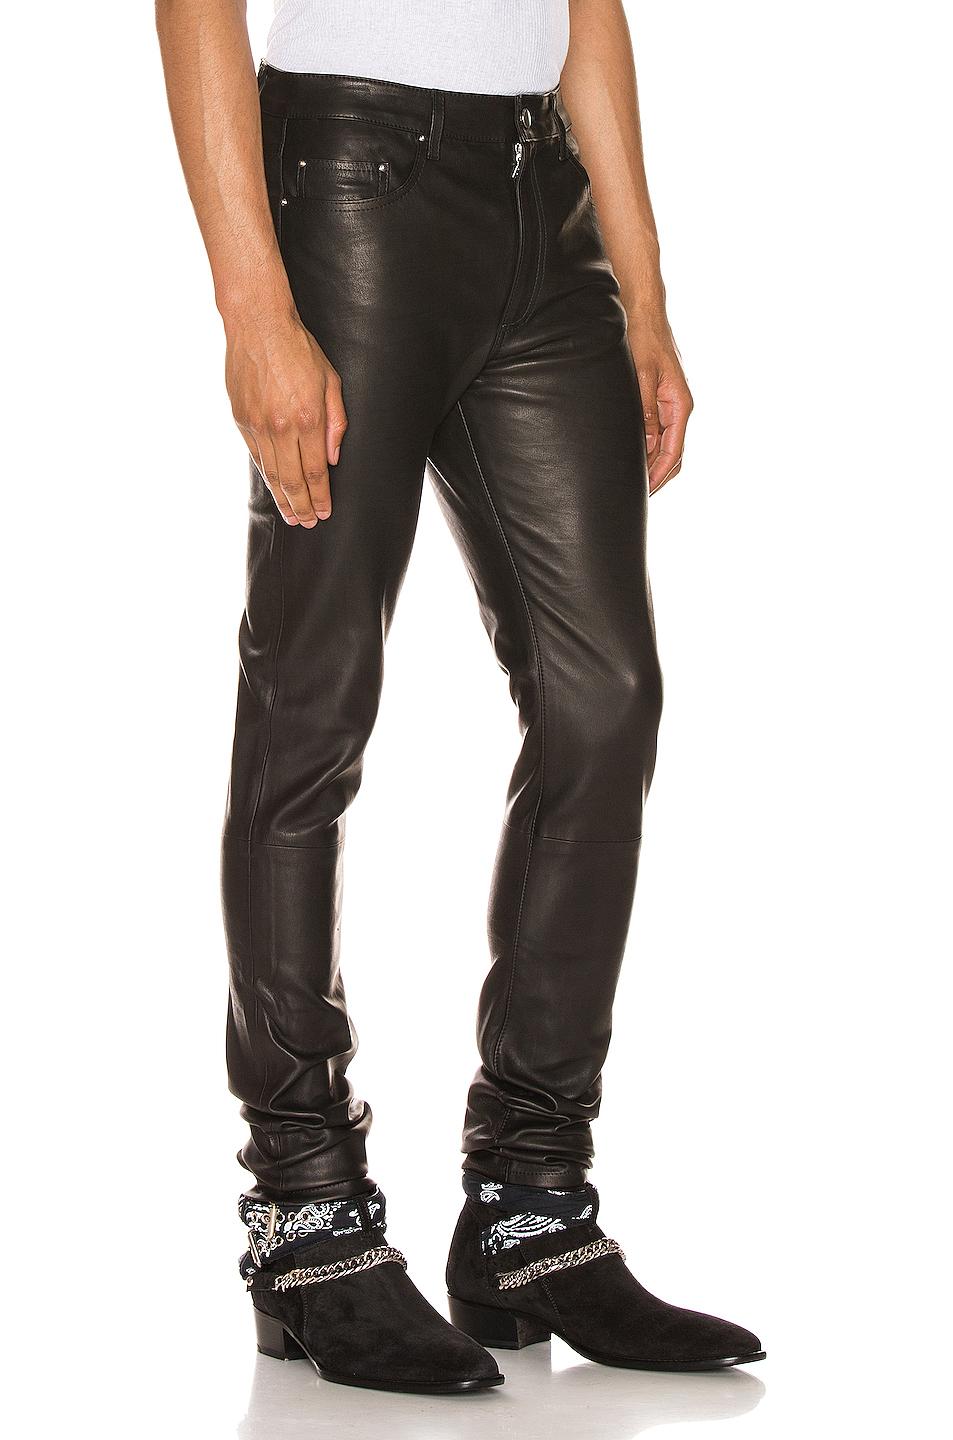 Amiri 5 Pocket Leather Pant in Black for Men - Lyst